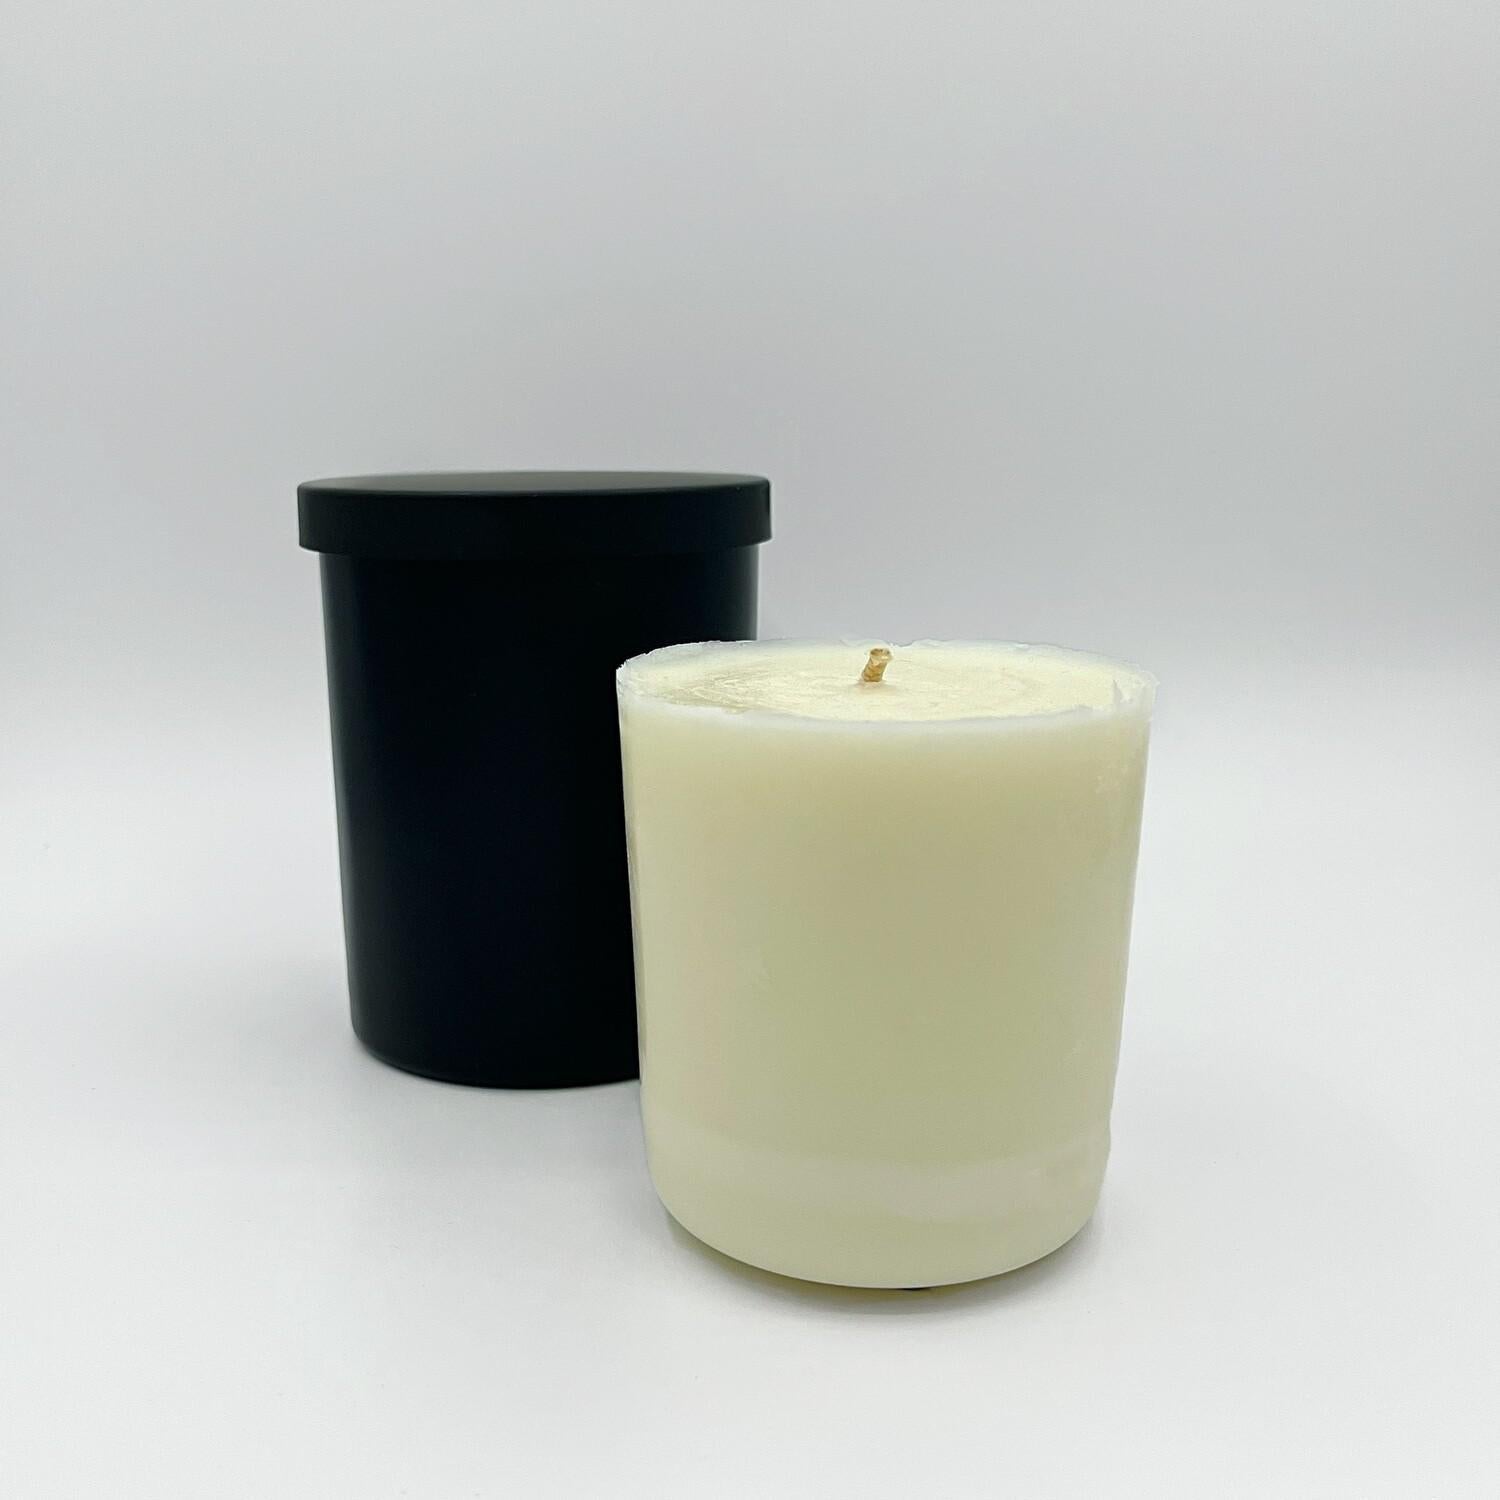 Premium Wax Candle | Calming Cascades